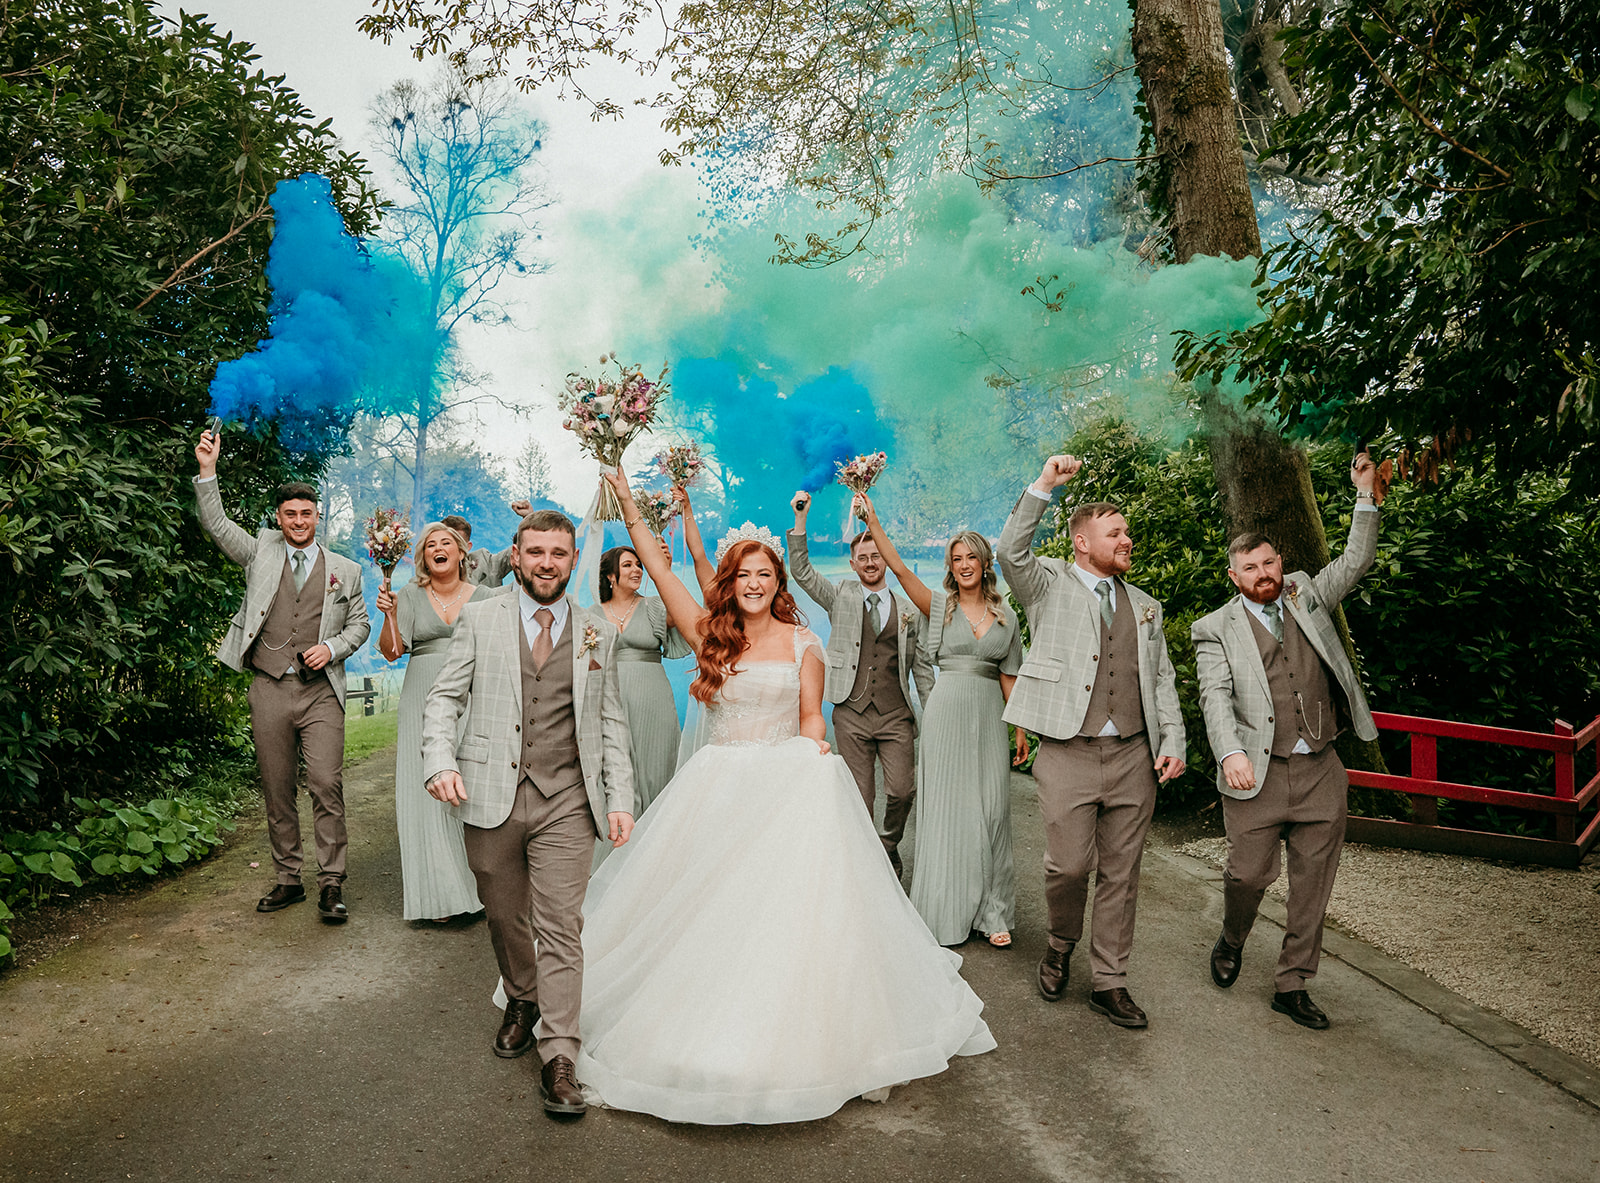 smoke bomb colourful derry Northern Ireland wedding venue beech hill